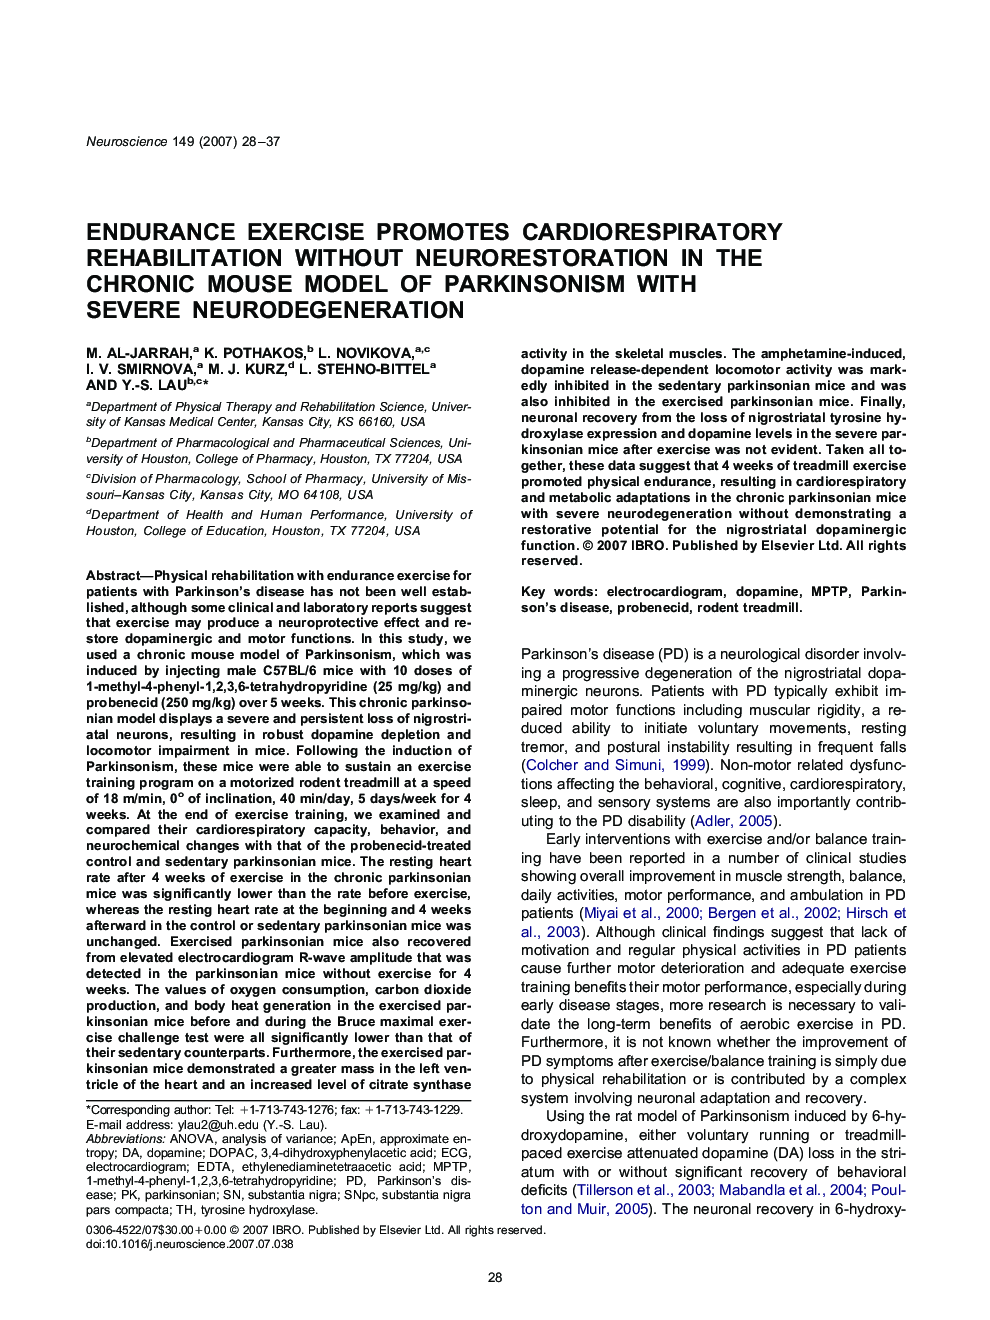 Endurance exercise promotes cardiorespiratory rehabilitation without neurorestoration in the chronic mouse model of Parkinsonism with severe neurodegeneration